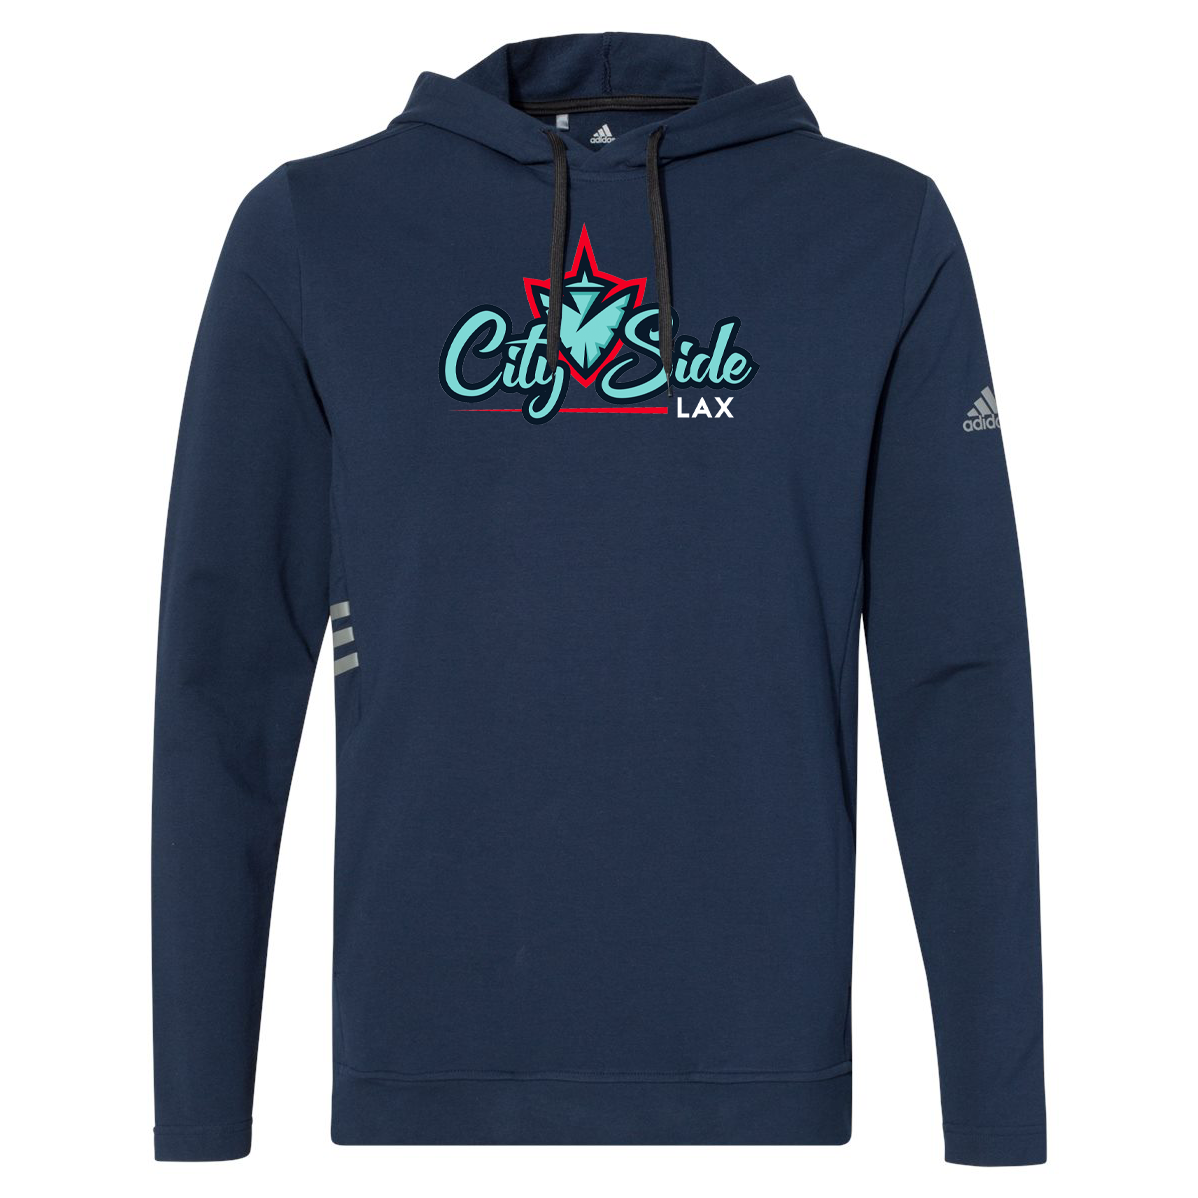 CitySide Lacrosse Adidas Sweatshirt